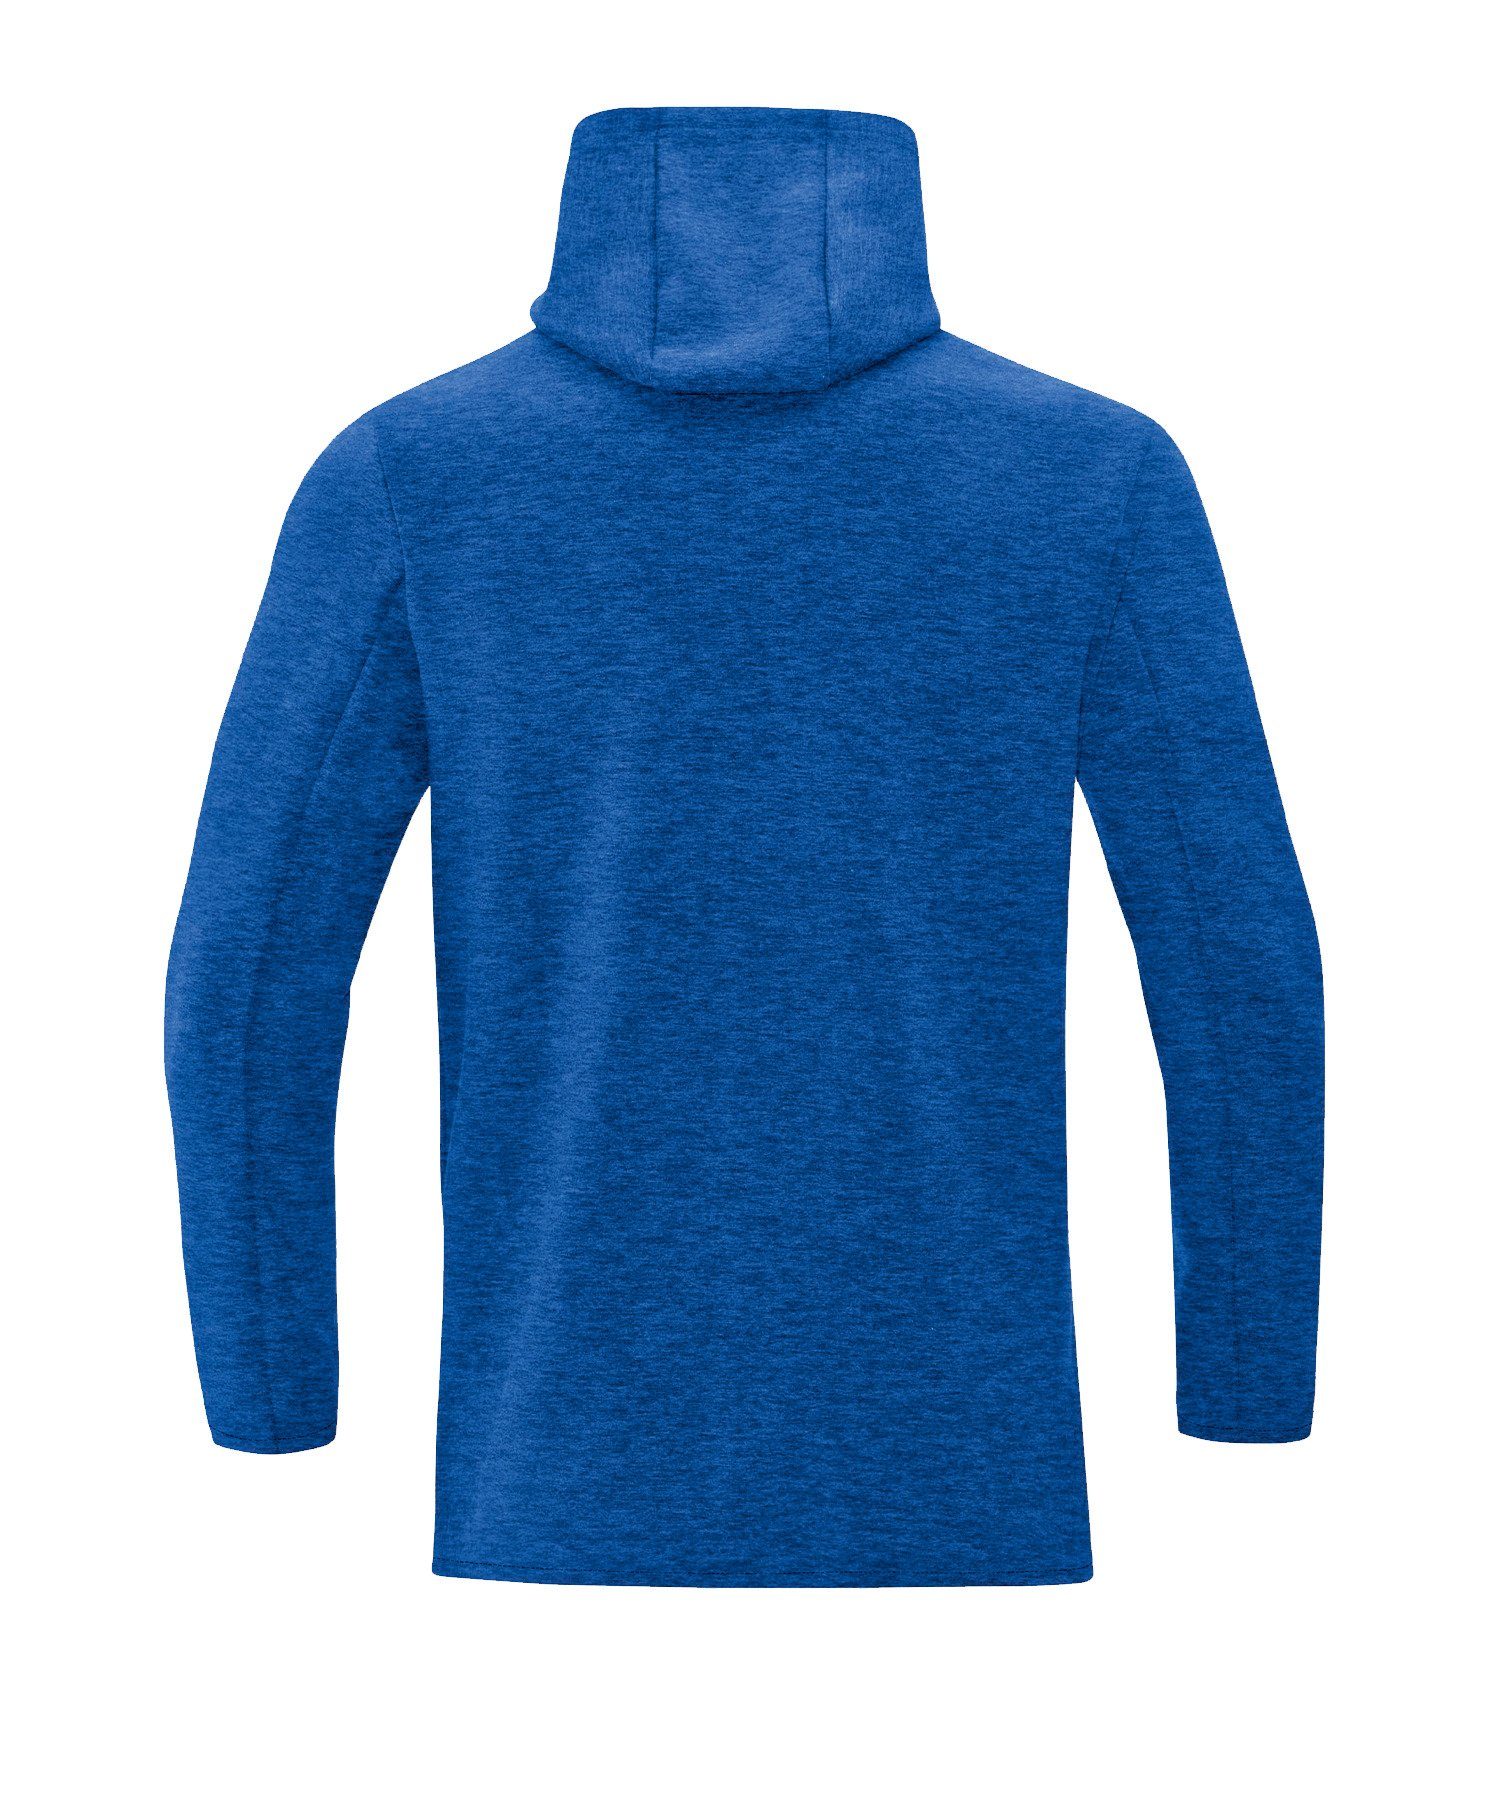 Sweater Jako Hoody Premium blauschwarz Basic Damen